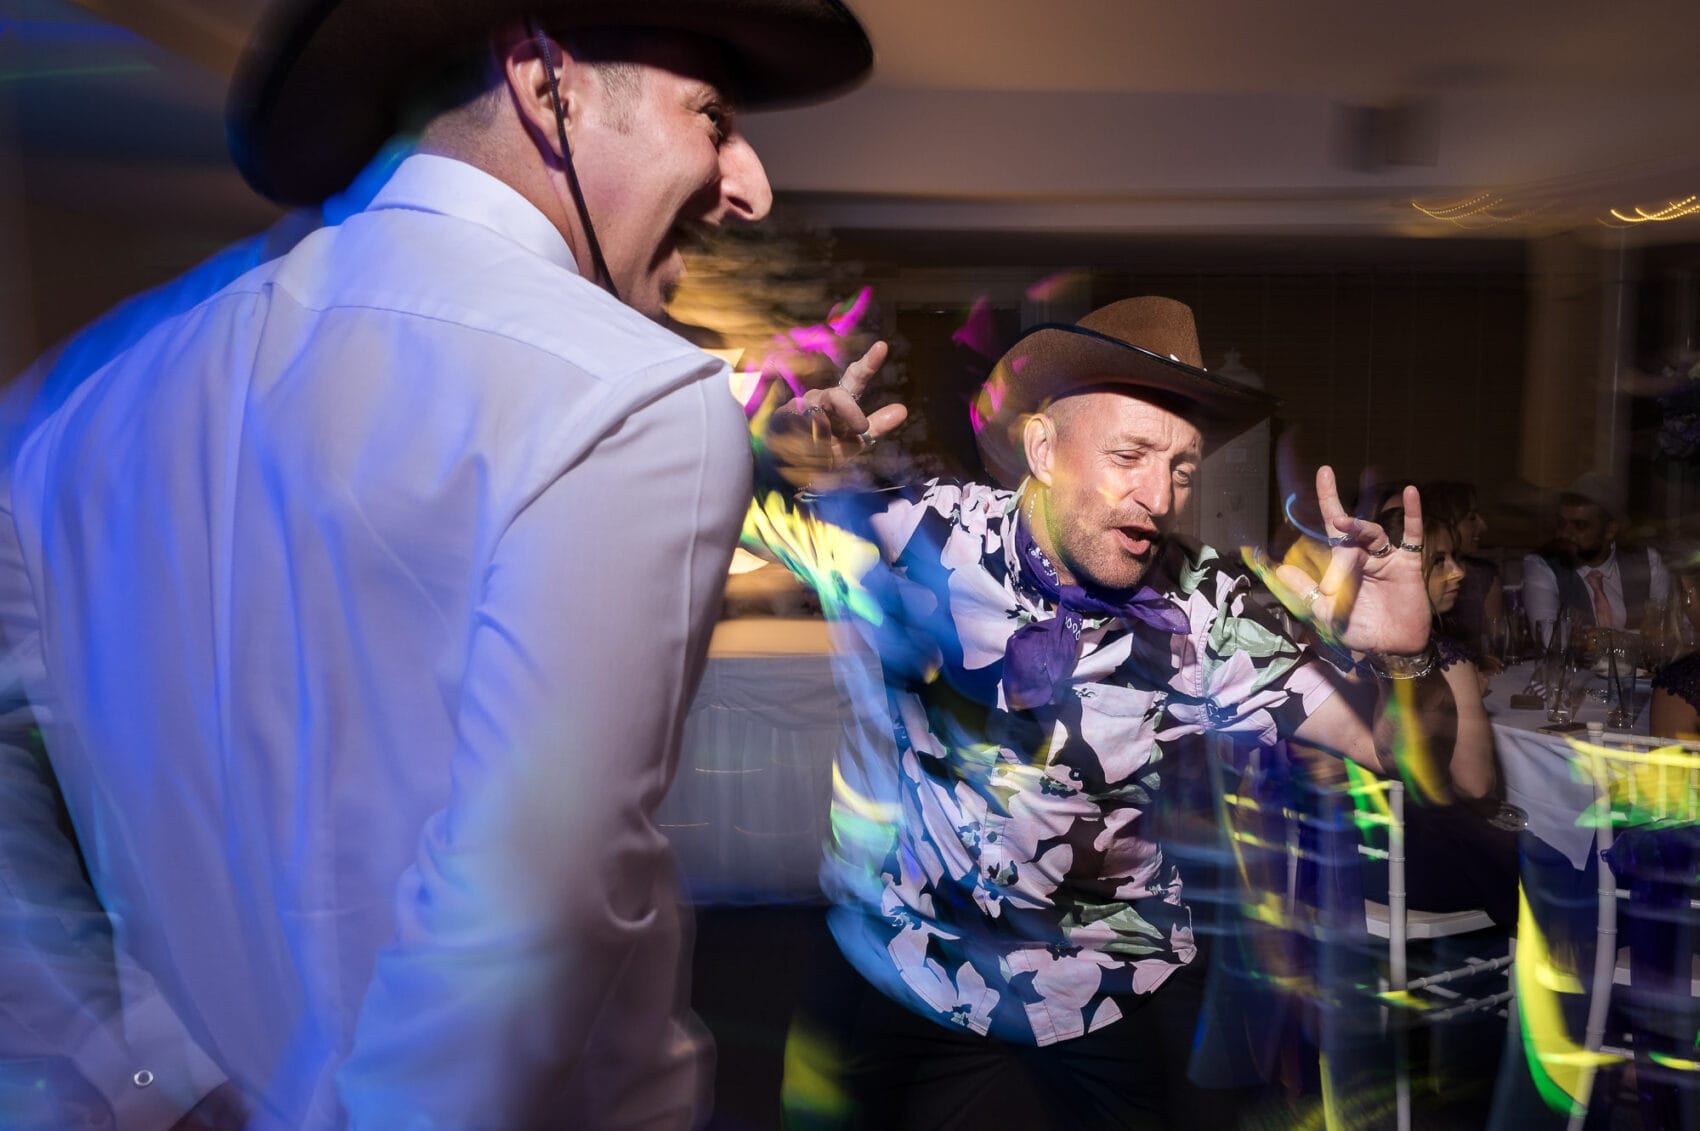 Wedding dancefloor action with cowboy hats